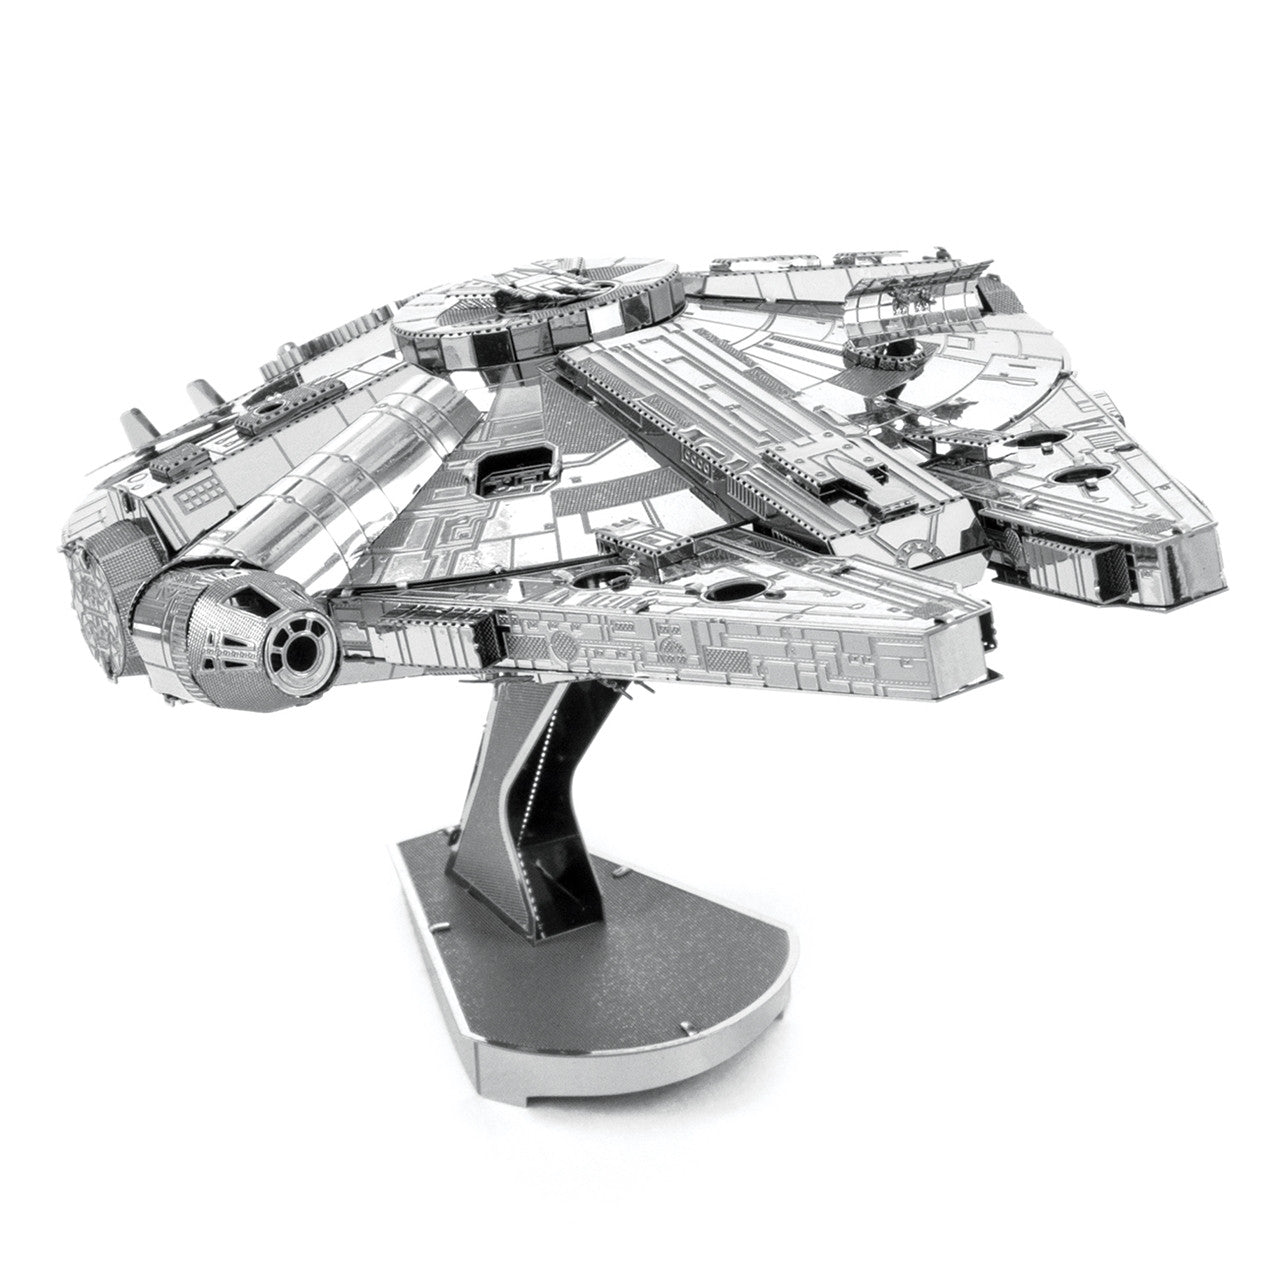 ICONX Star Wars Millennium Falcon